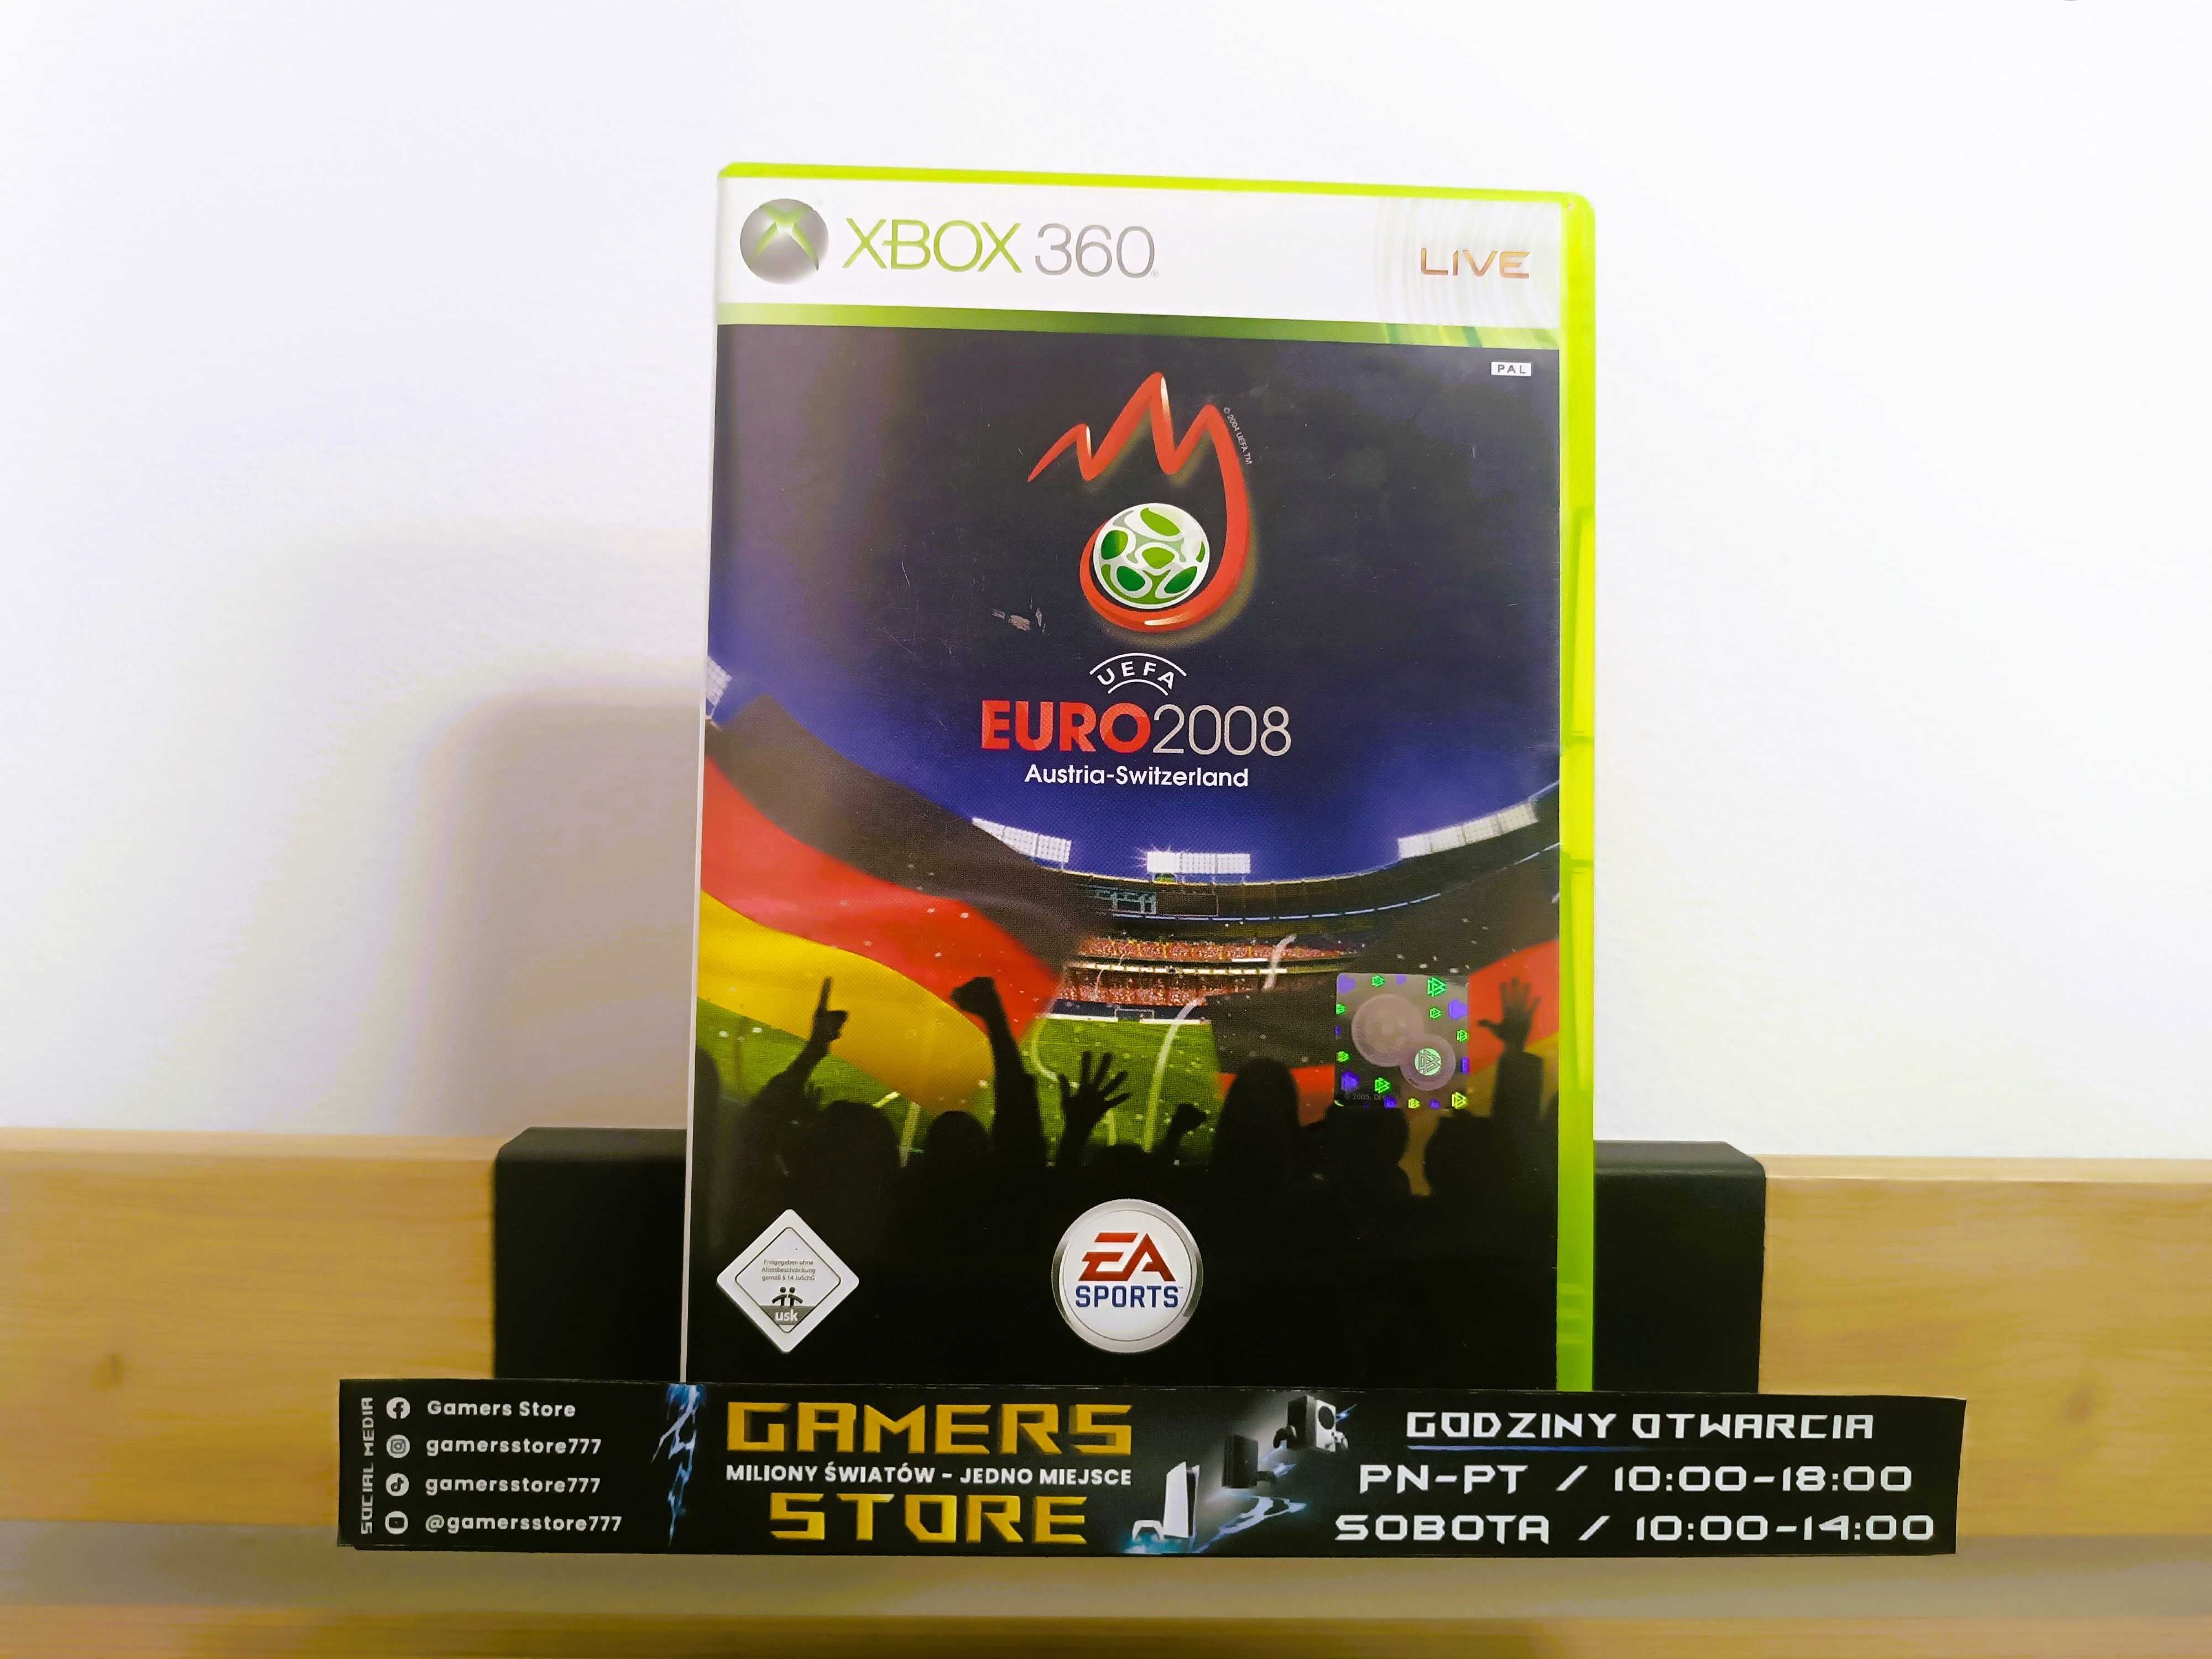 UEFA EURO 2008 - Xbox 360 - GAMERS STORE - Nowa